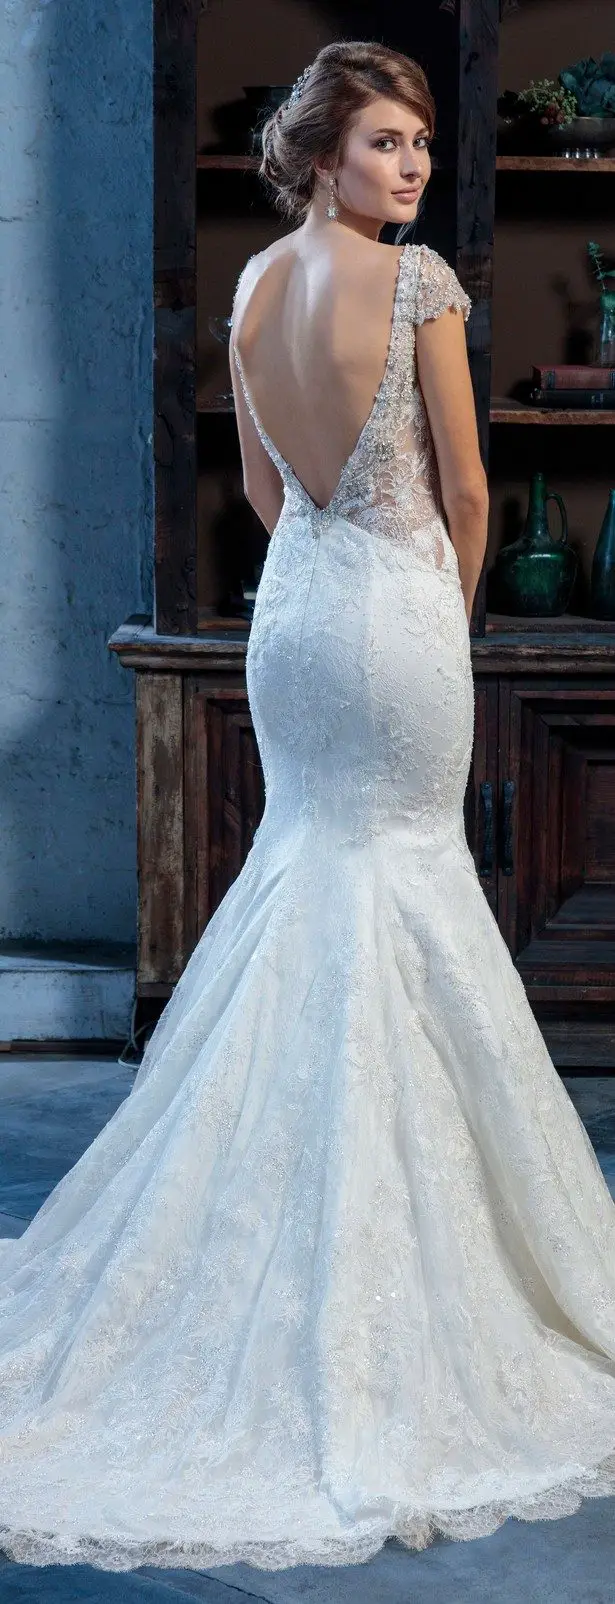 Wedding Dress - Amaré Couture from Casablanca Bridal